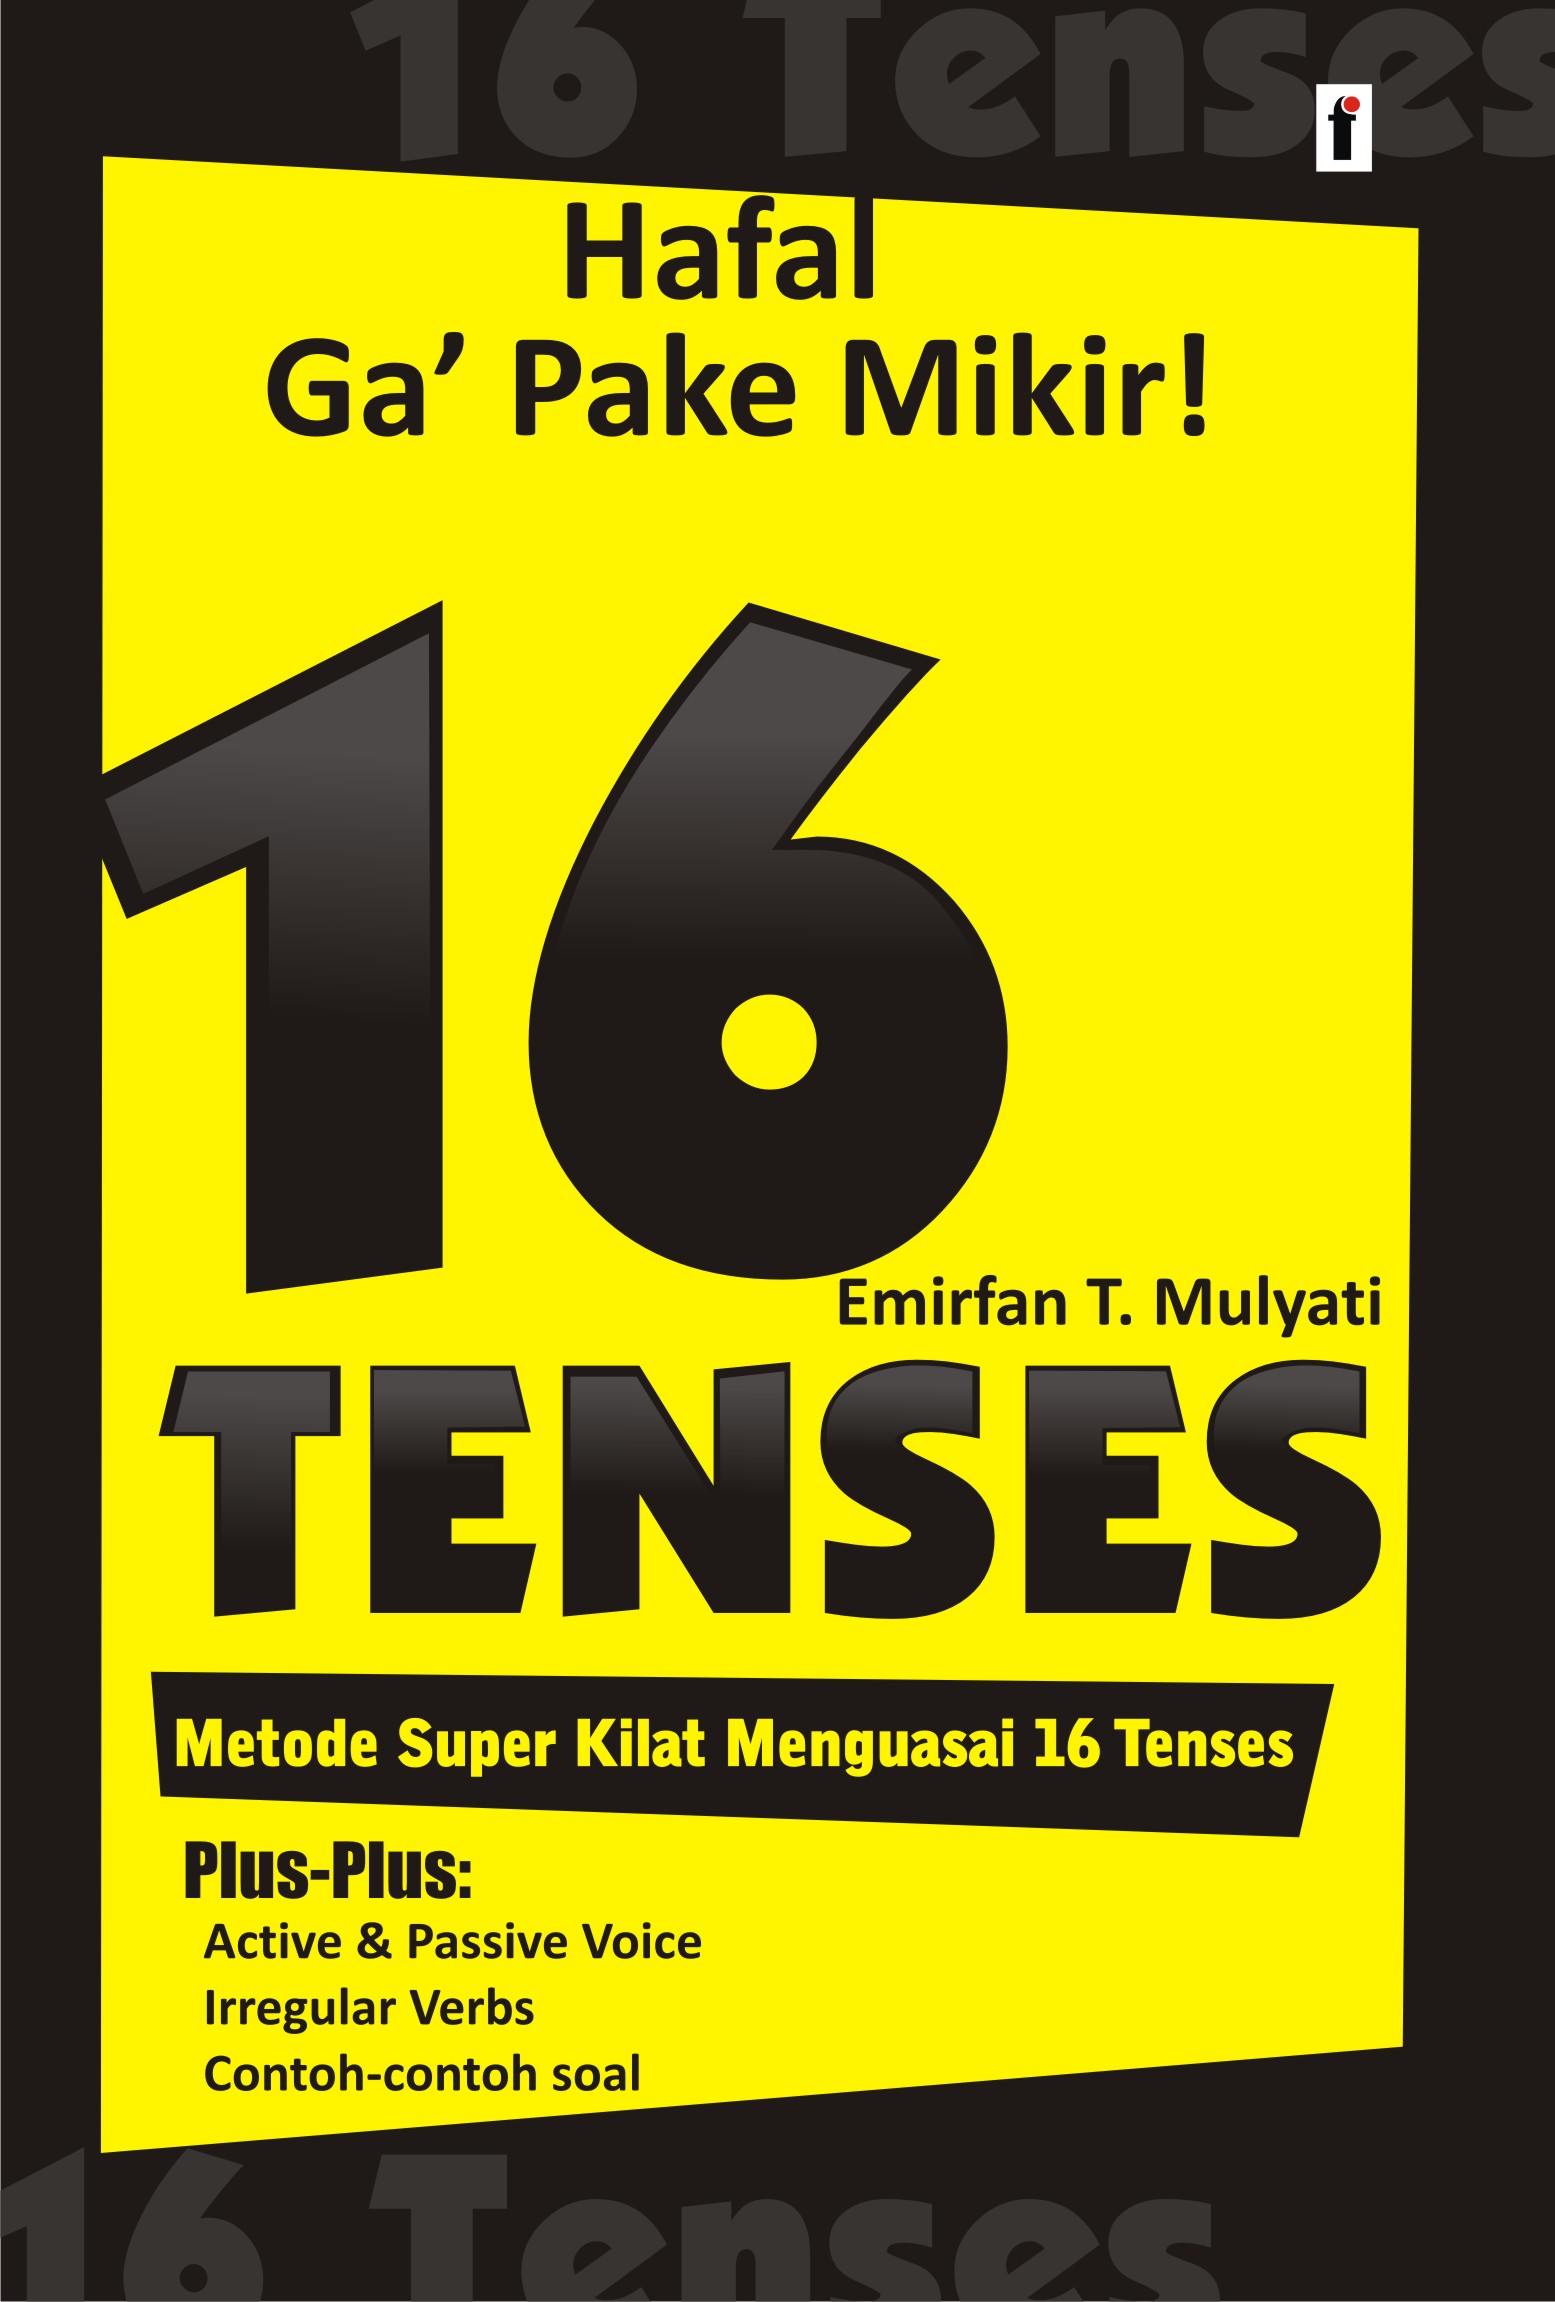 cover/(21-11-2019)hafal-ga-pake-mikir!-16-tenses2.jpg